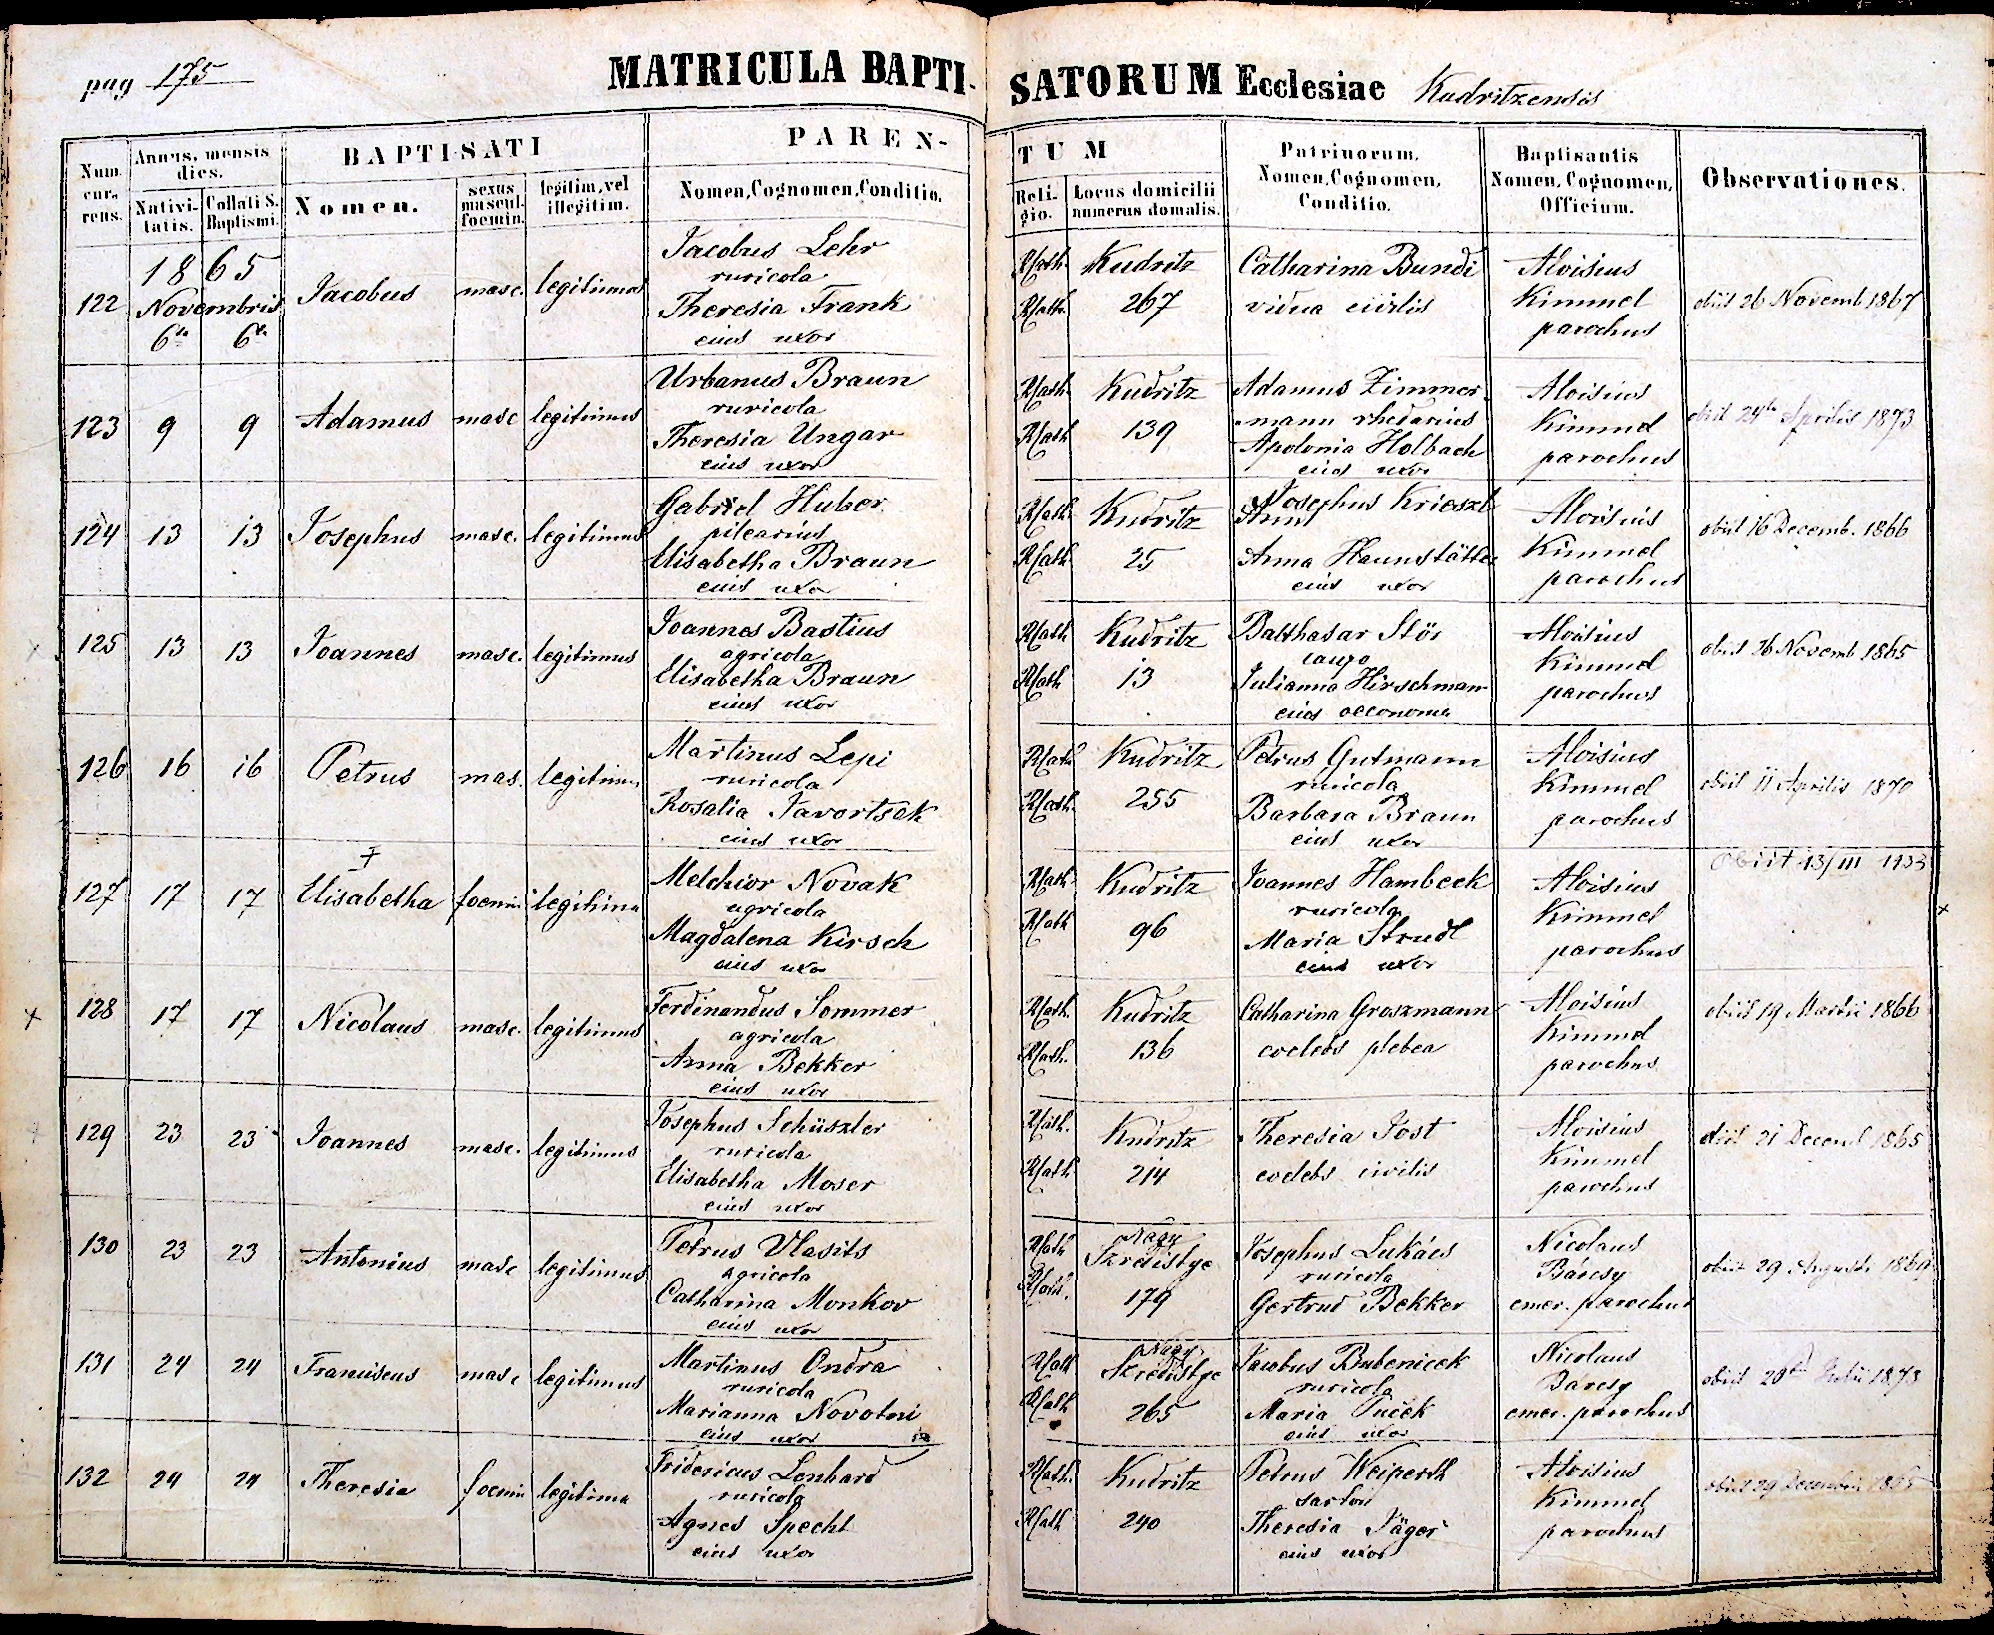 images/church_records/BIRTHS/1852-1870B/175